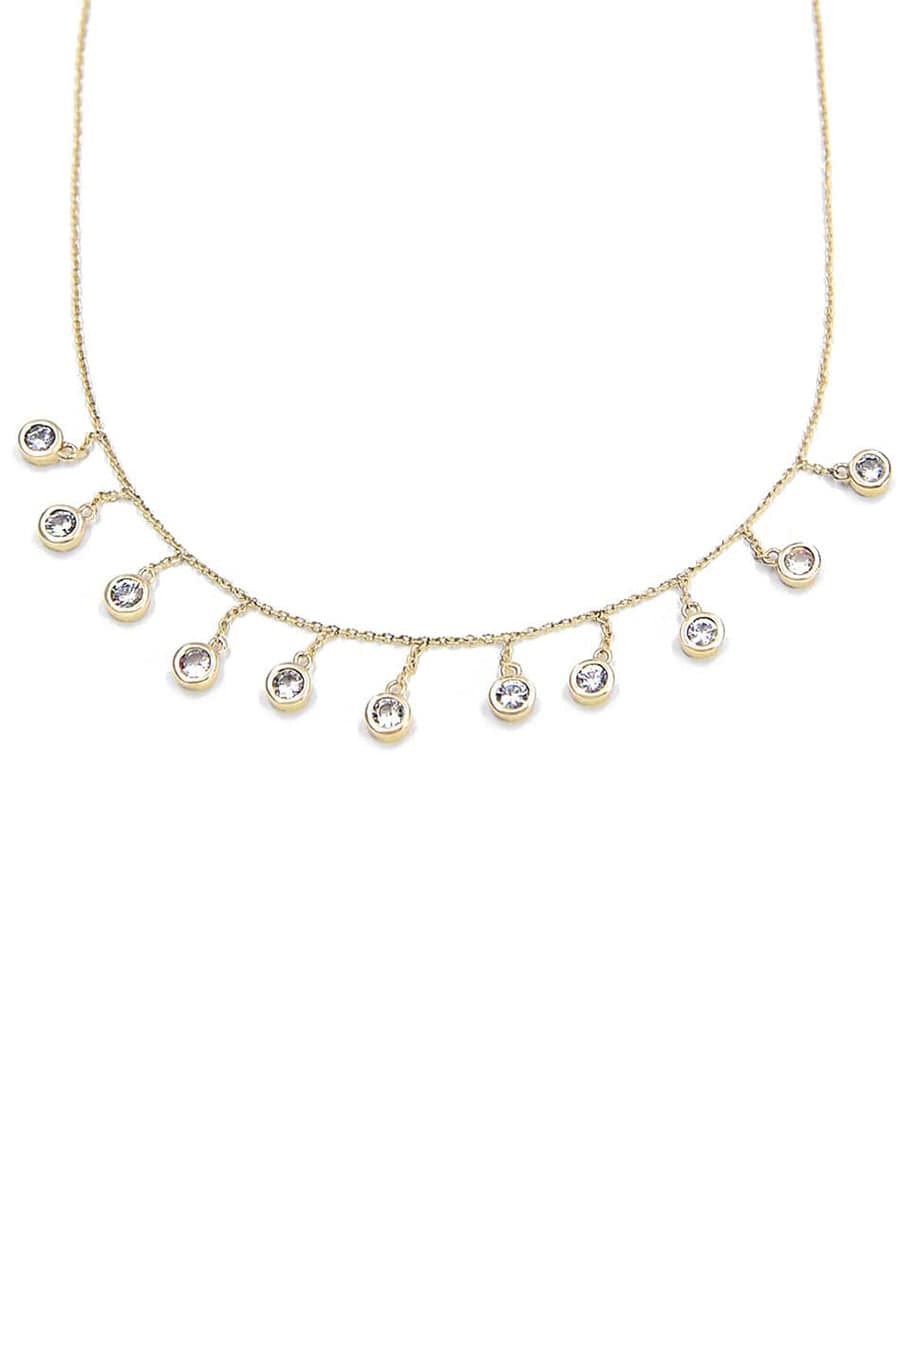 BONDEYE JEWELRY-Droplet White Sapphire Necklace-YELLOW GOLD